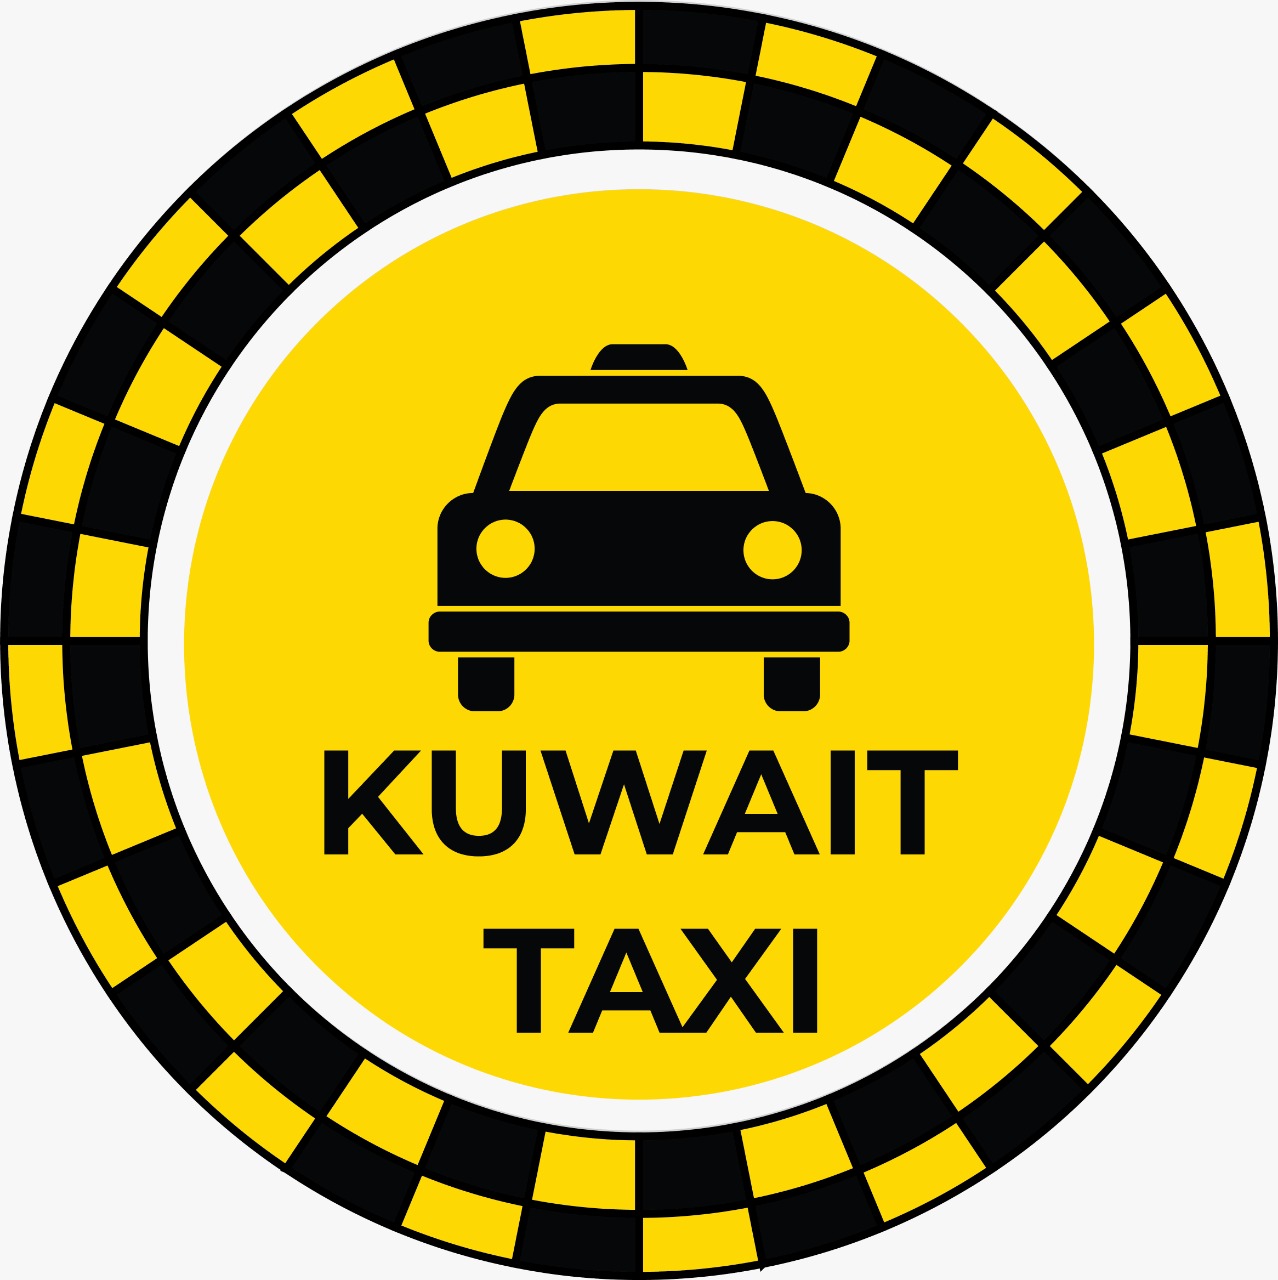 Taxi Number in Mishref / Mishref Taxi Kuwait